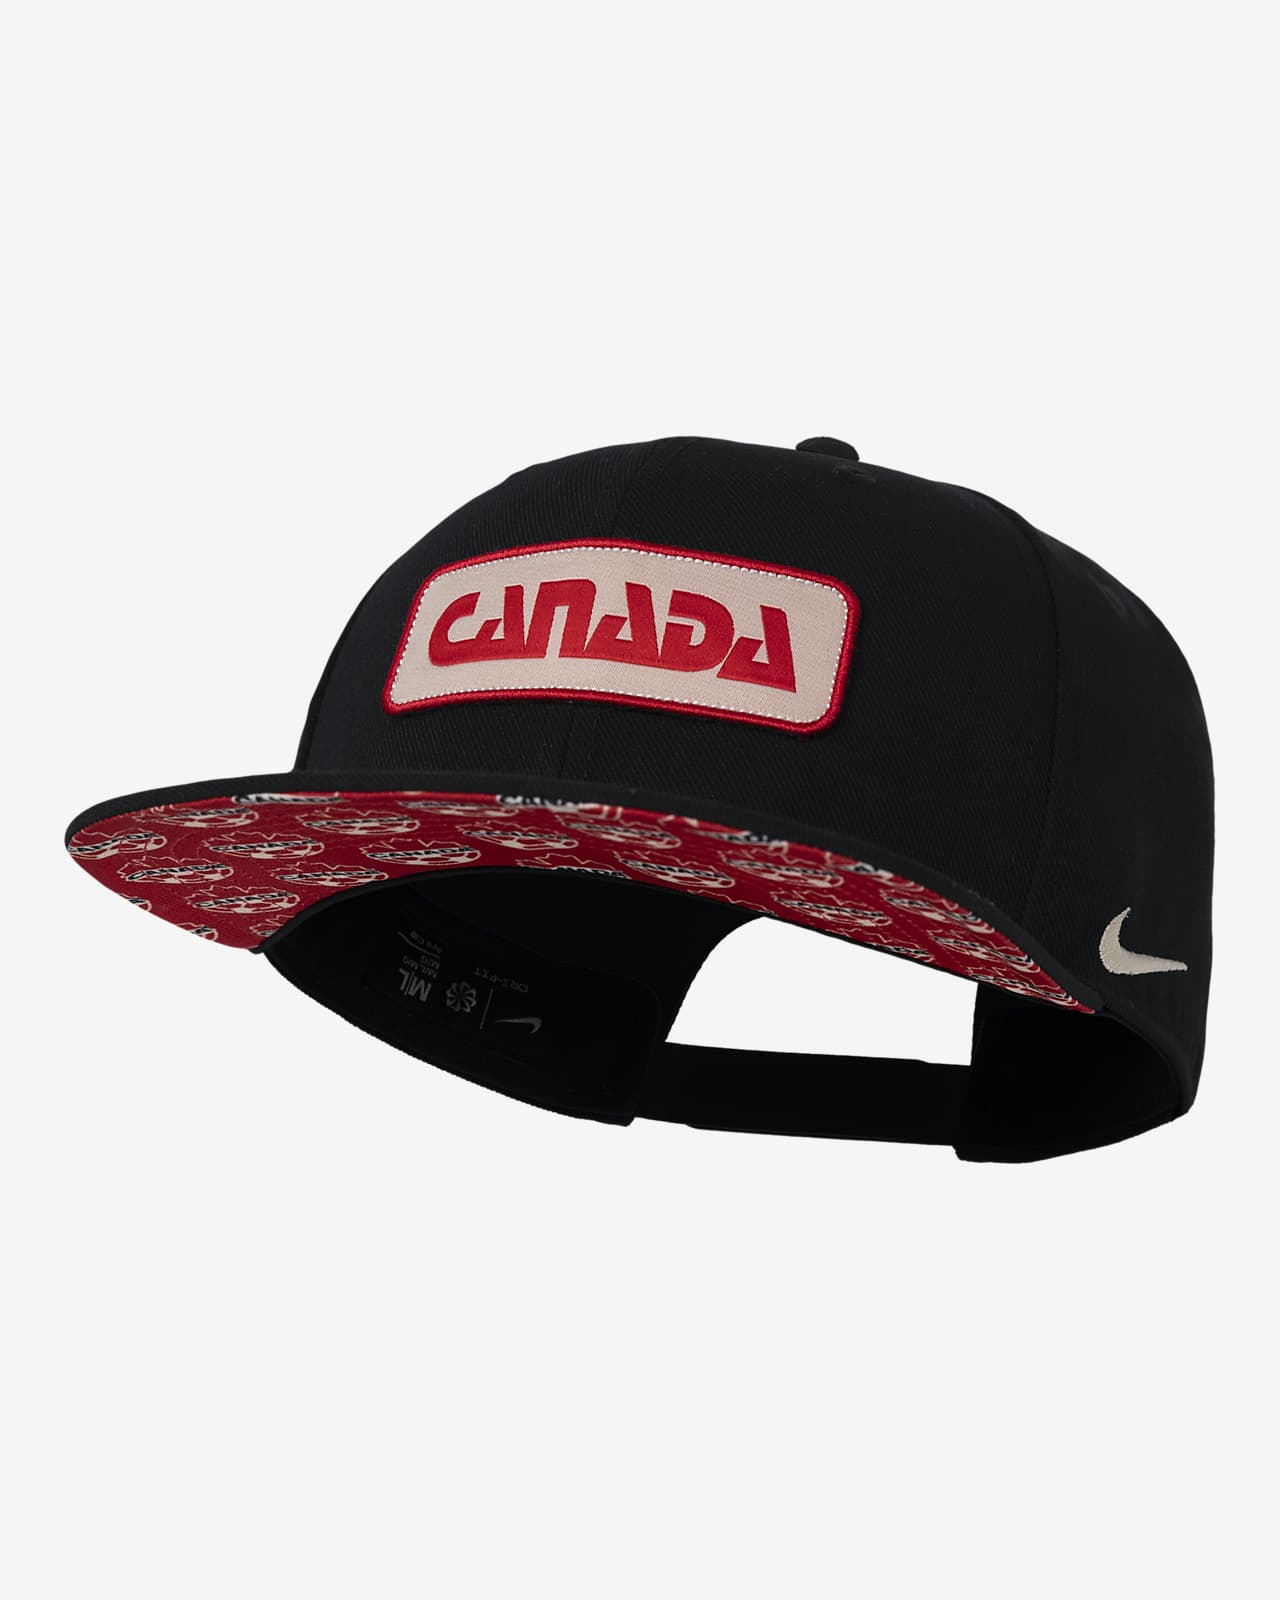 Canada Pro Nike Soccer Cap